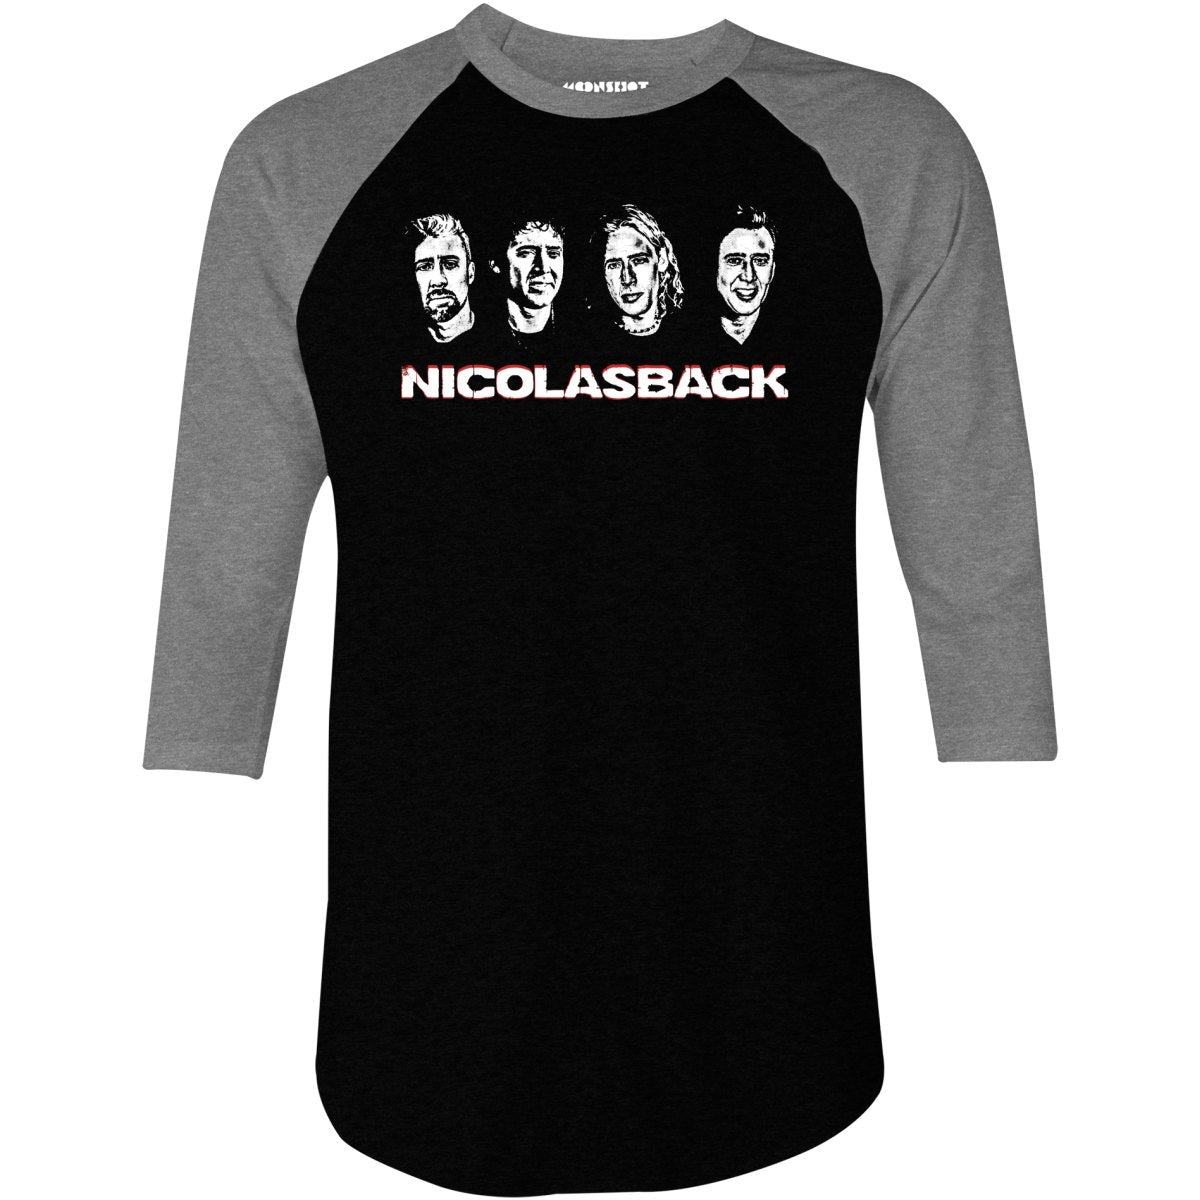 Nicolasback - Nickelback Nicolas Cage Mashup - 3/4 Sleeve Raglan T-Shirt